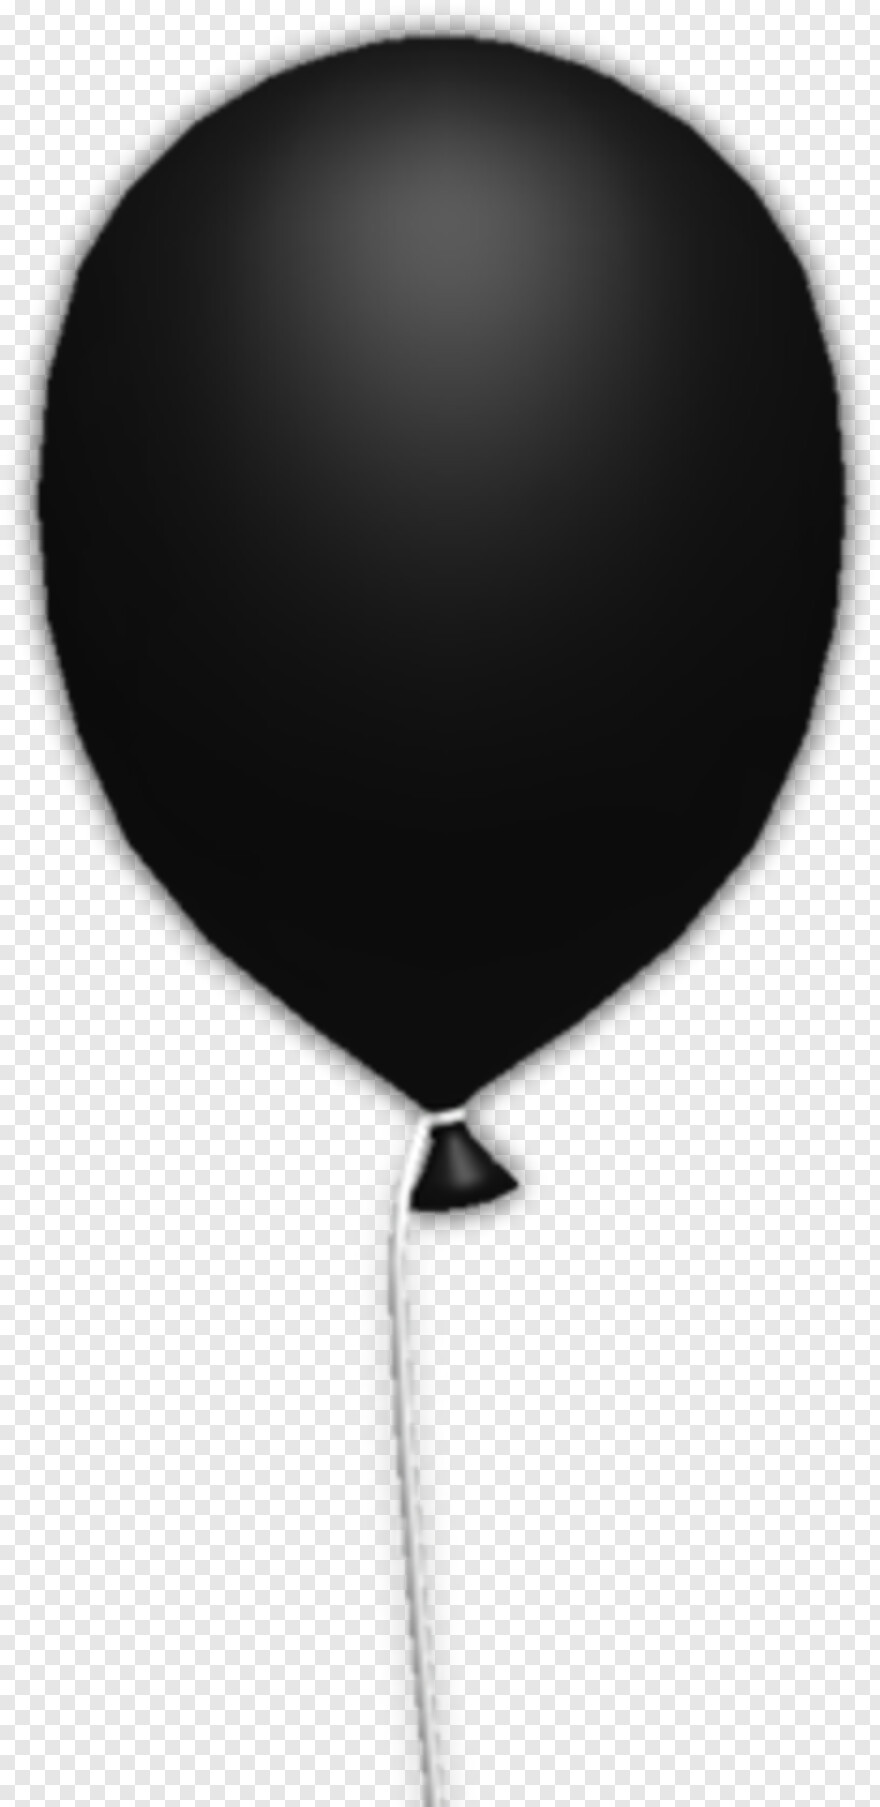 balloon-transparent-background # 415448